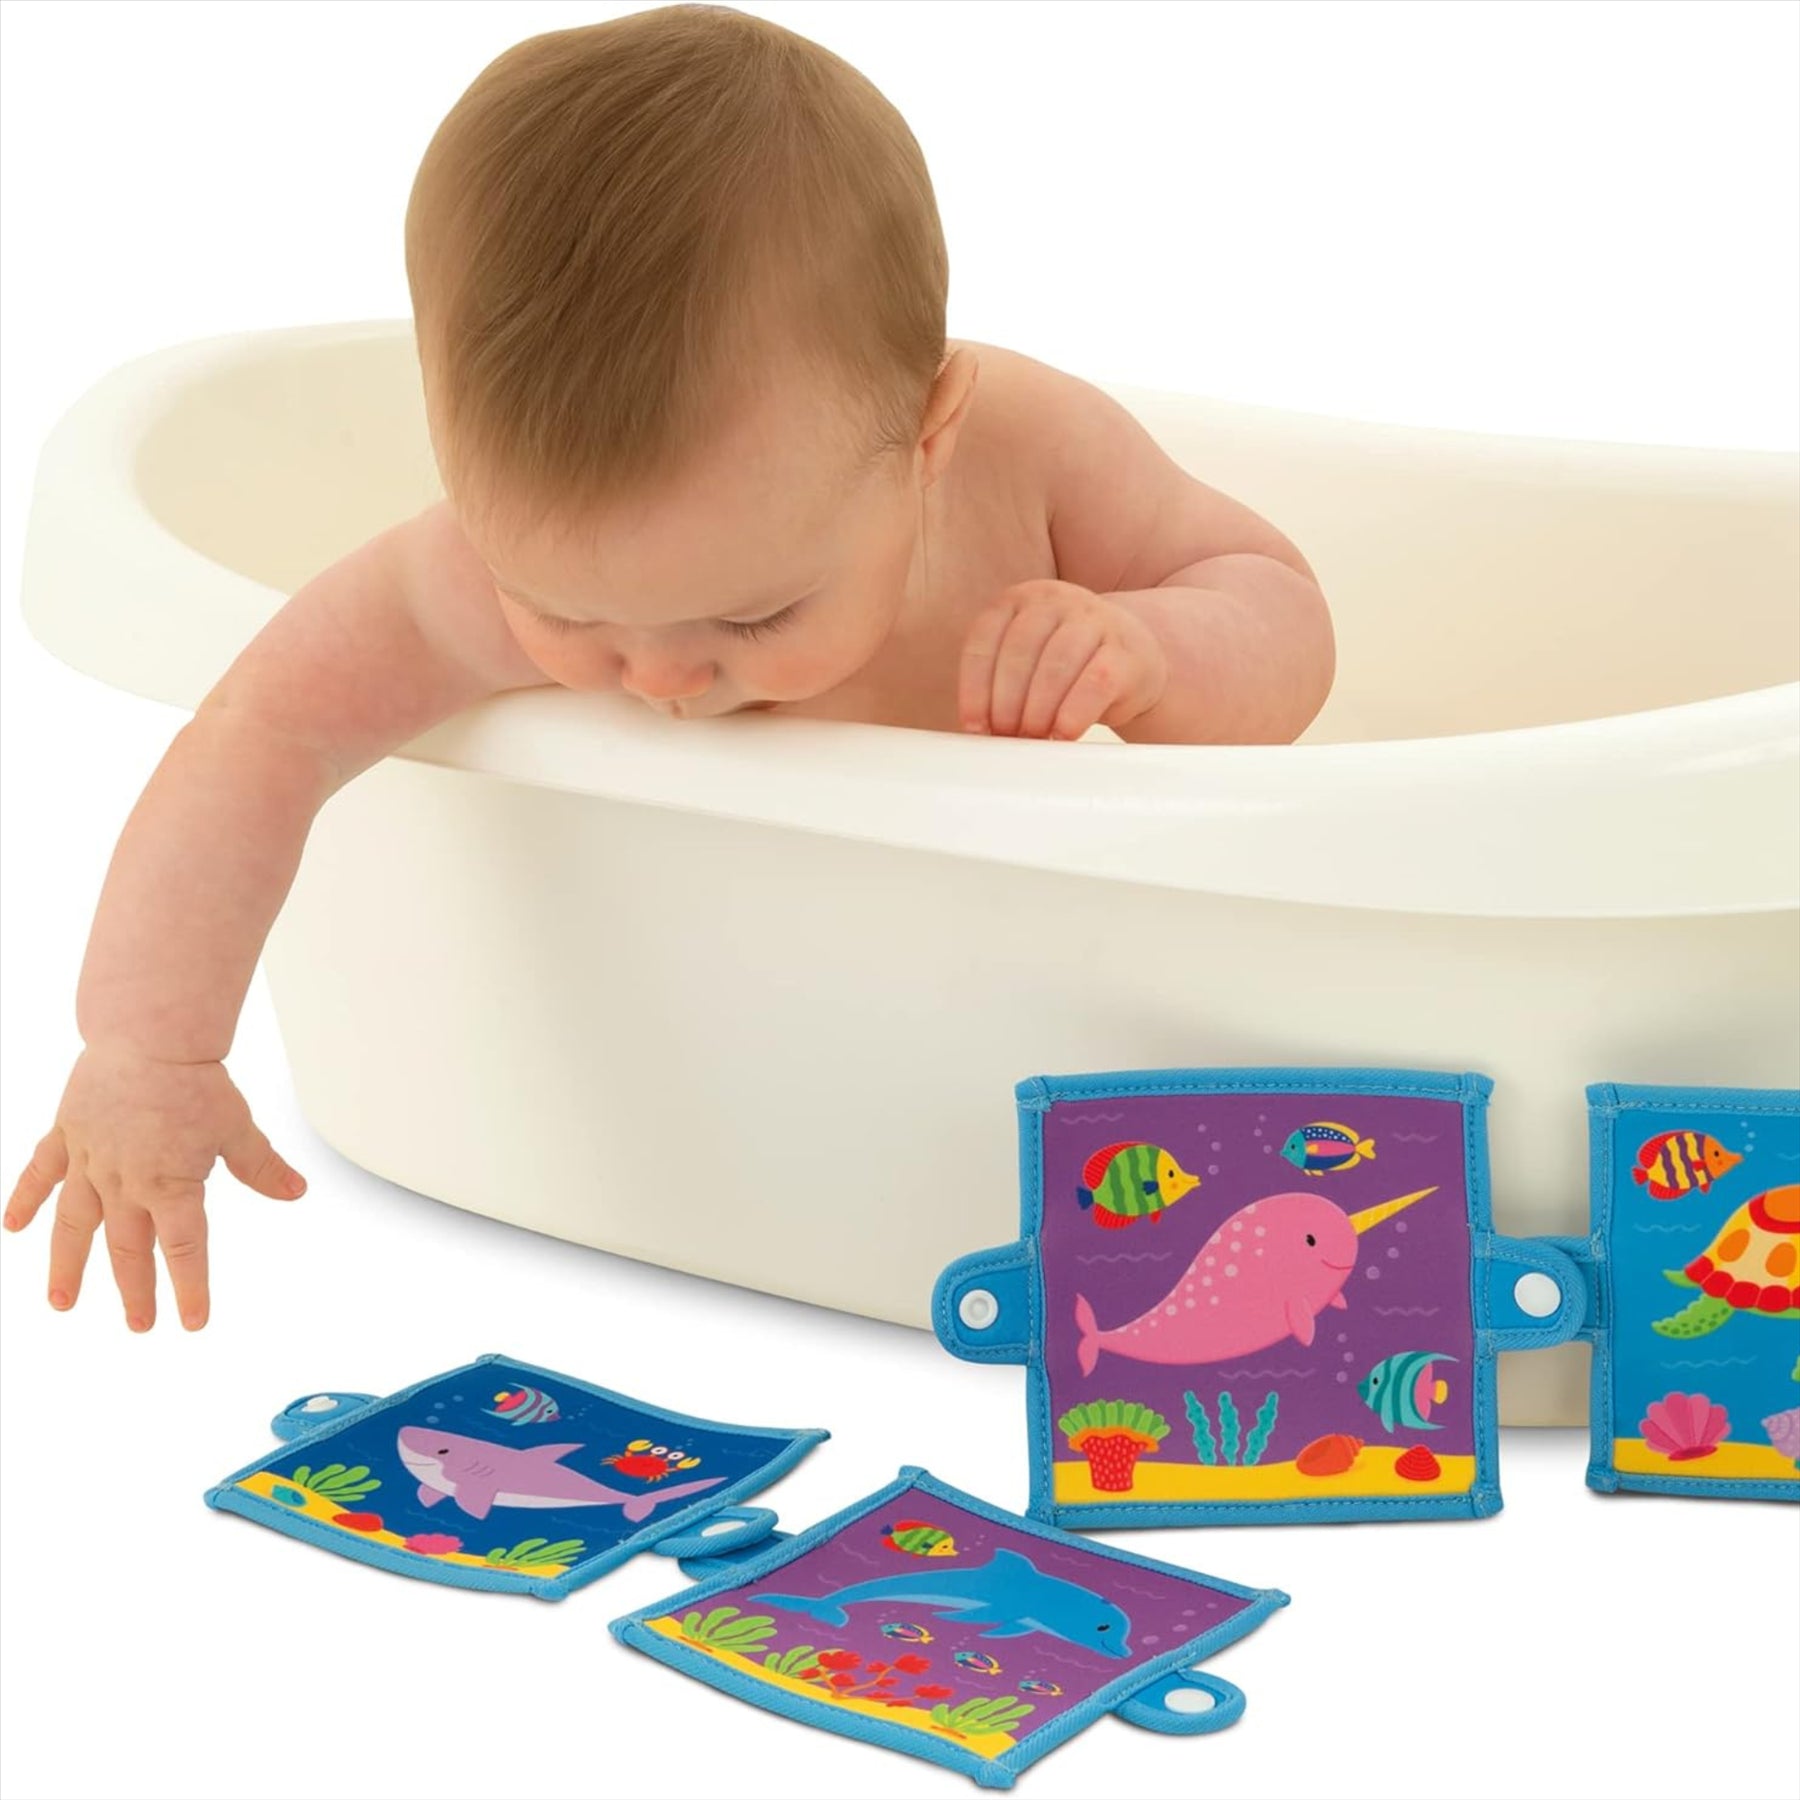 Galt Baby Pop Book Ocean Animal and Fish Bath Toy - Toptoys2u